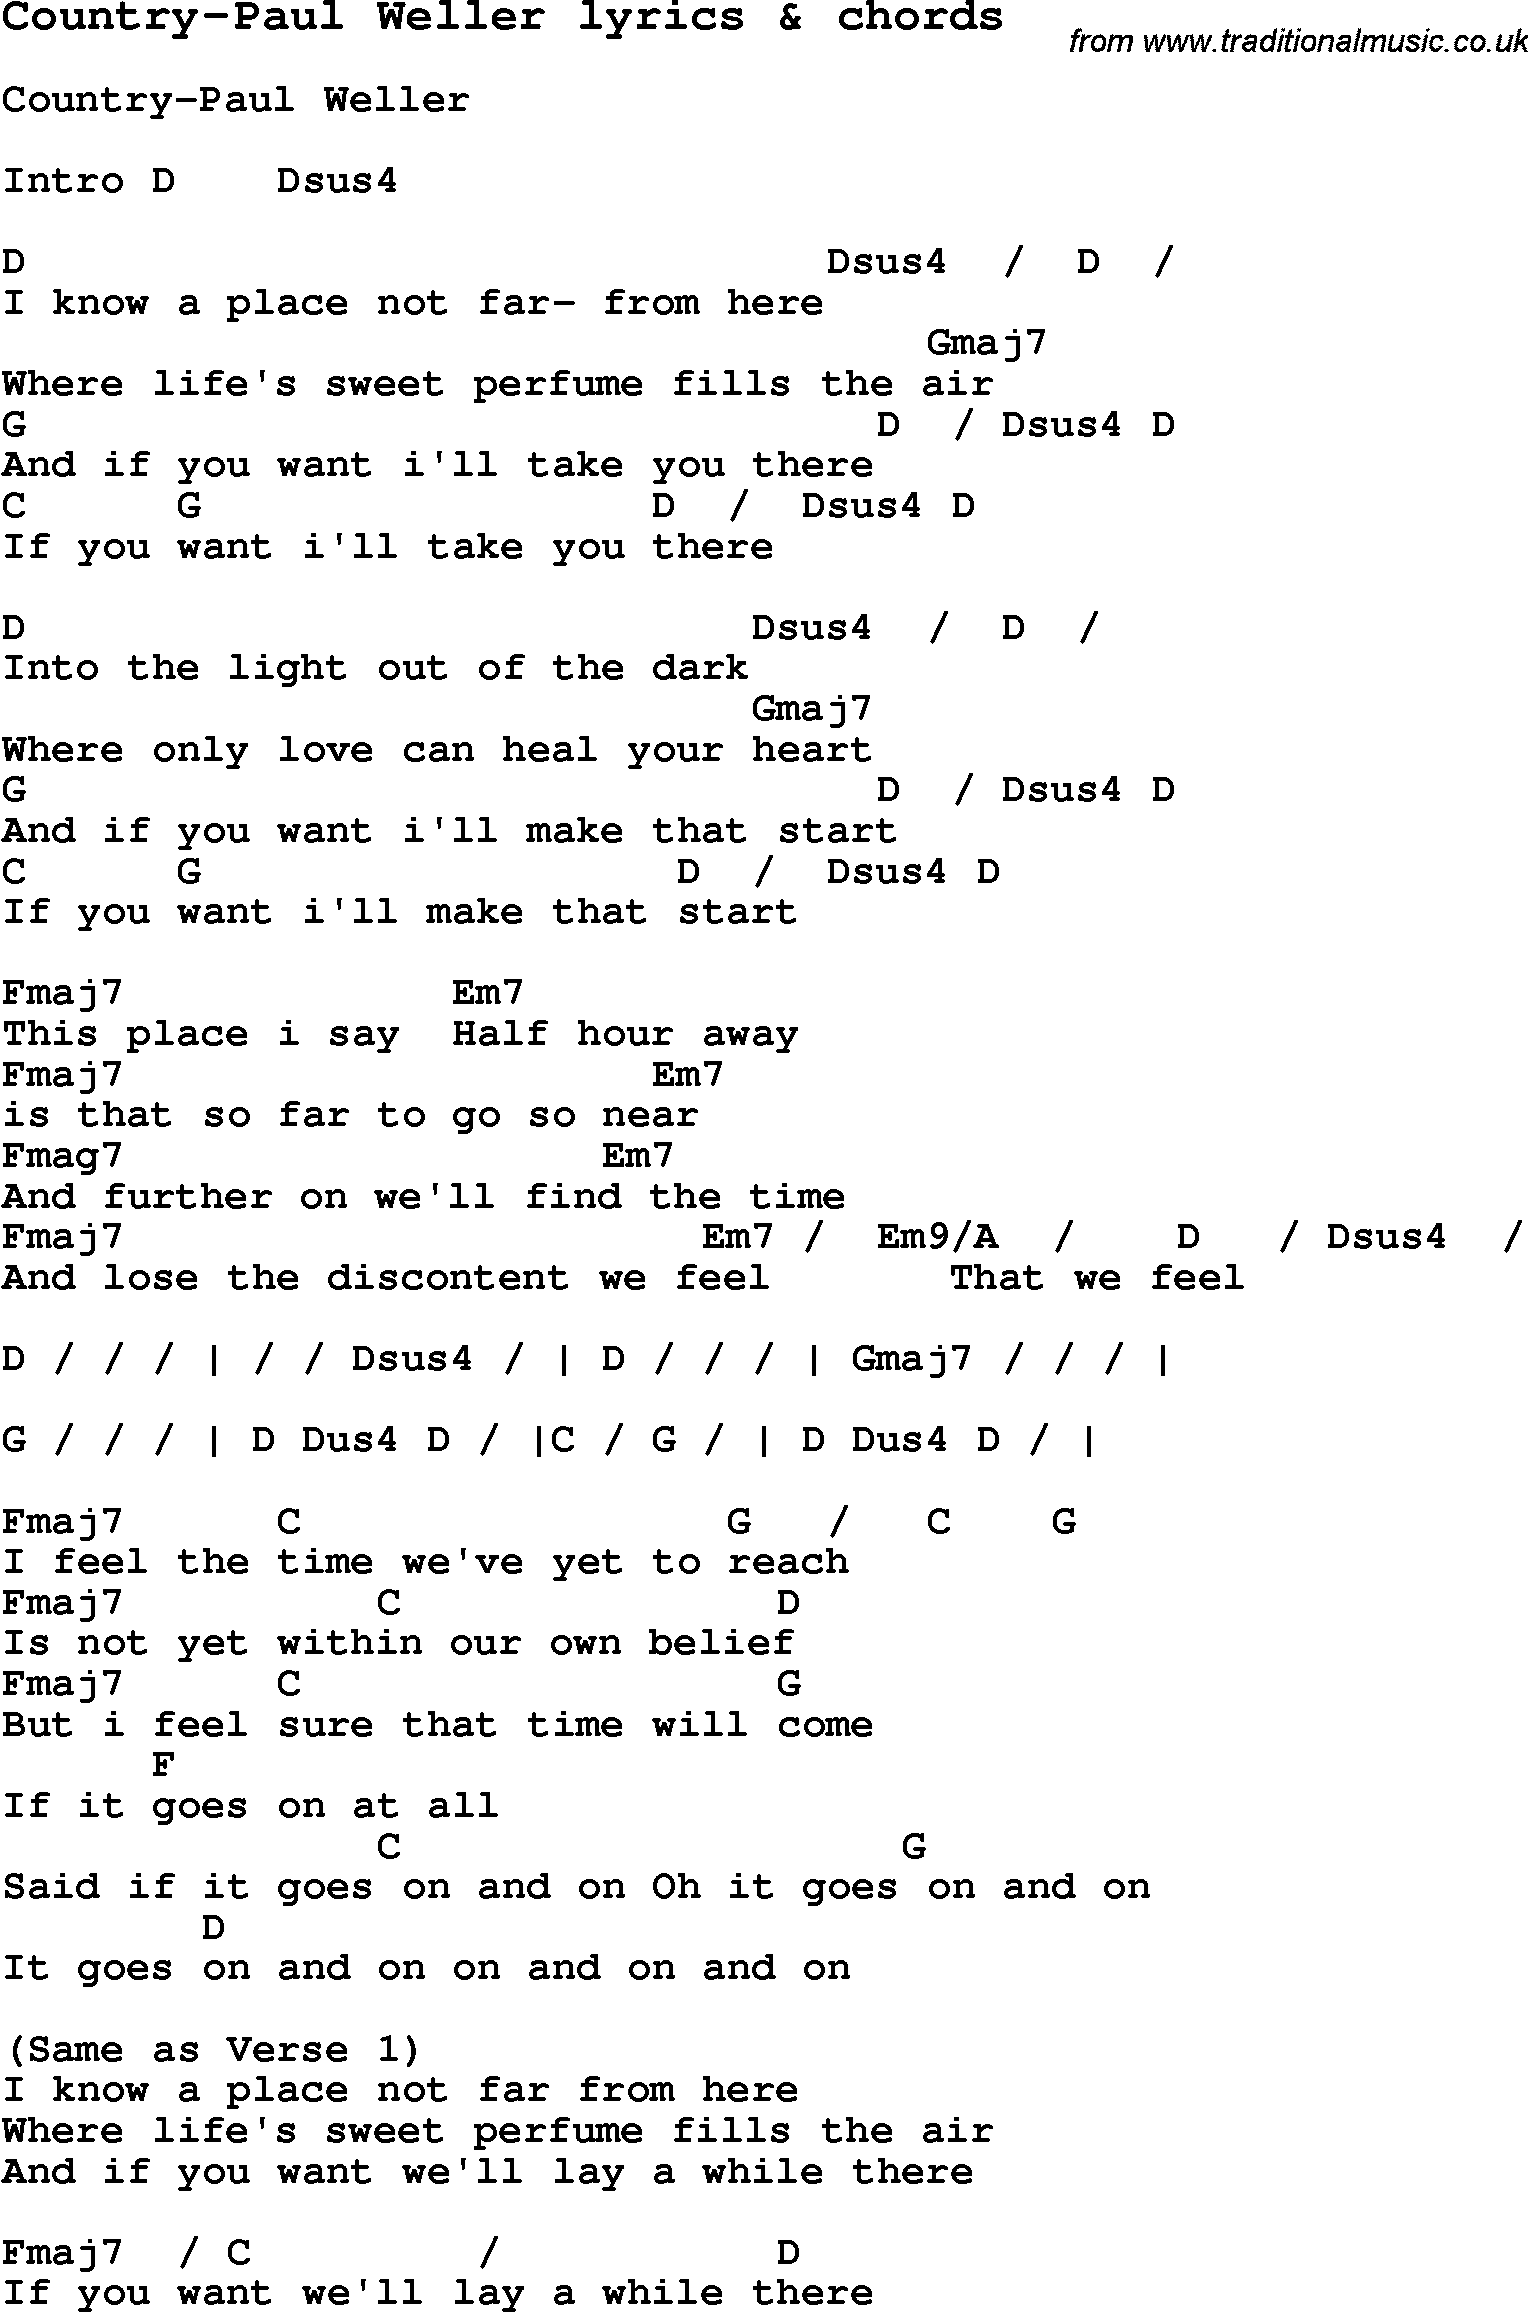 Love Song Lyrics for: Country-Paul Weller with chords for Ukulele, Guitar Banjo etc.